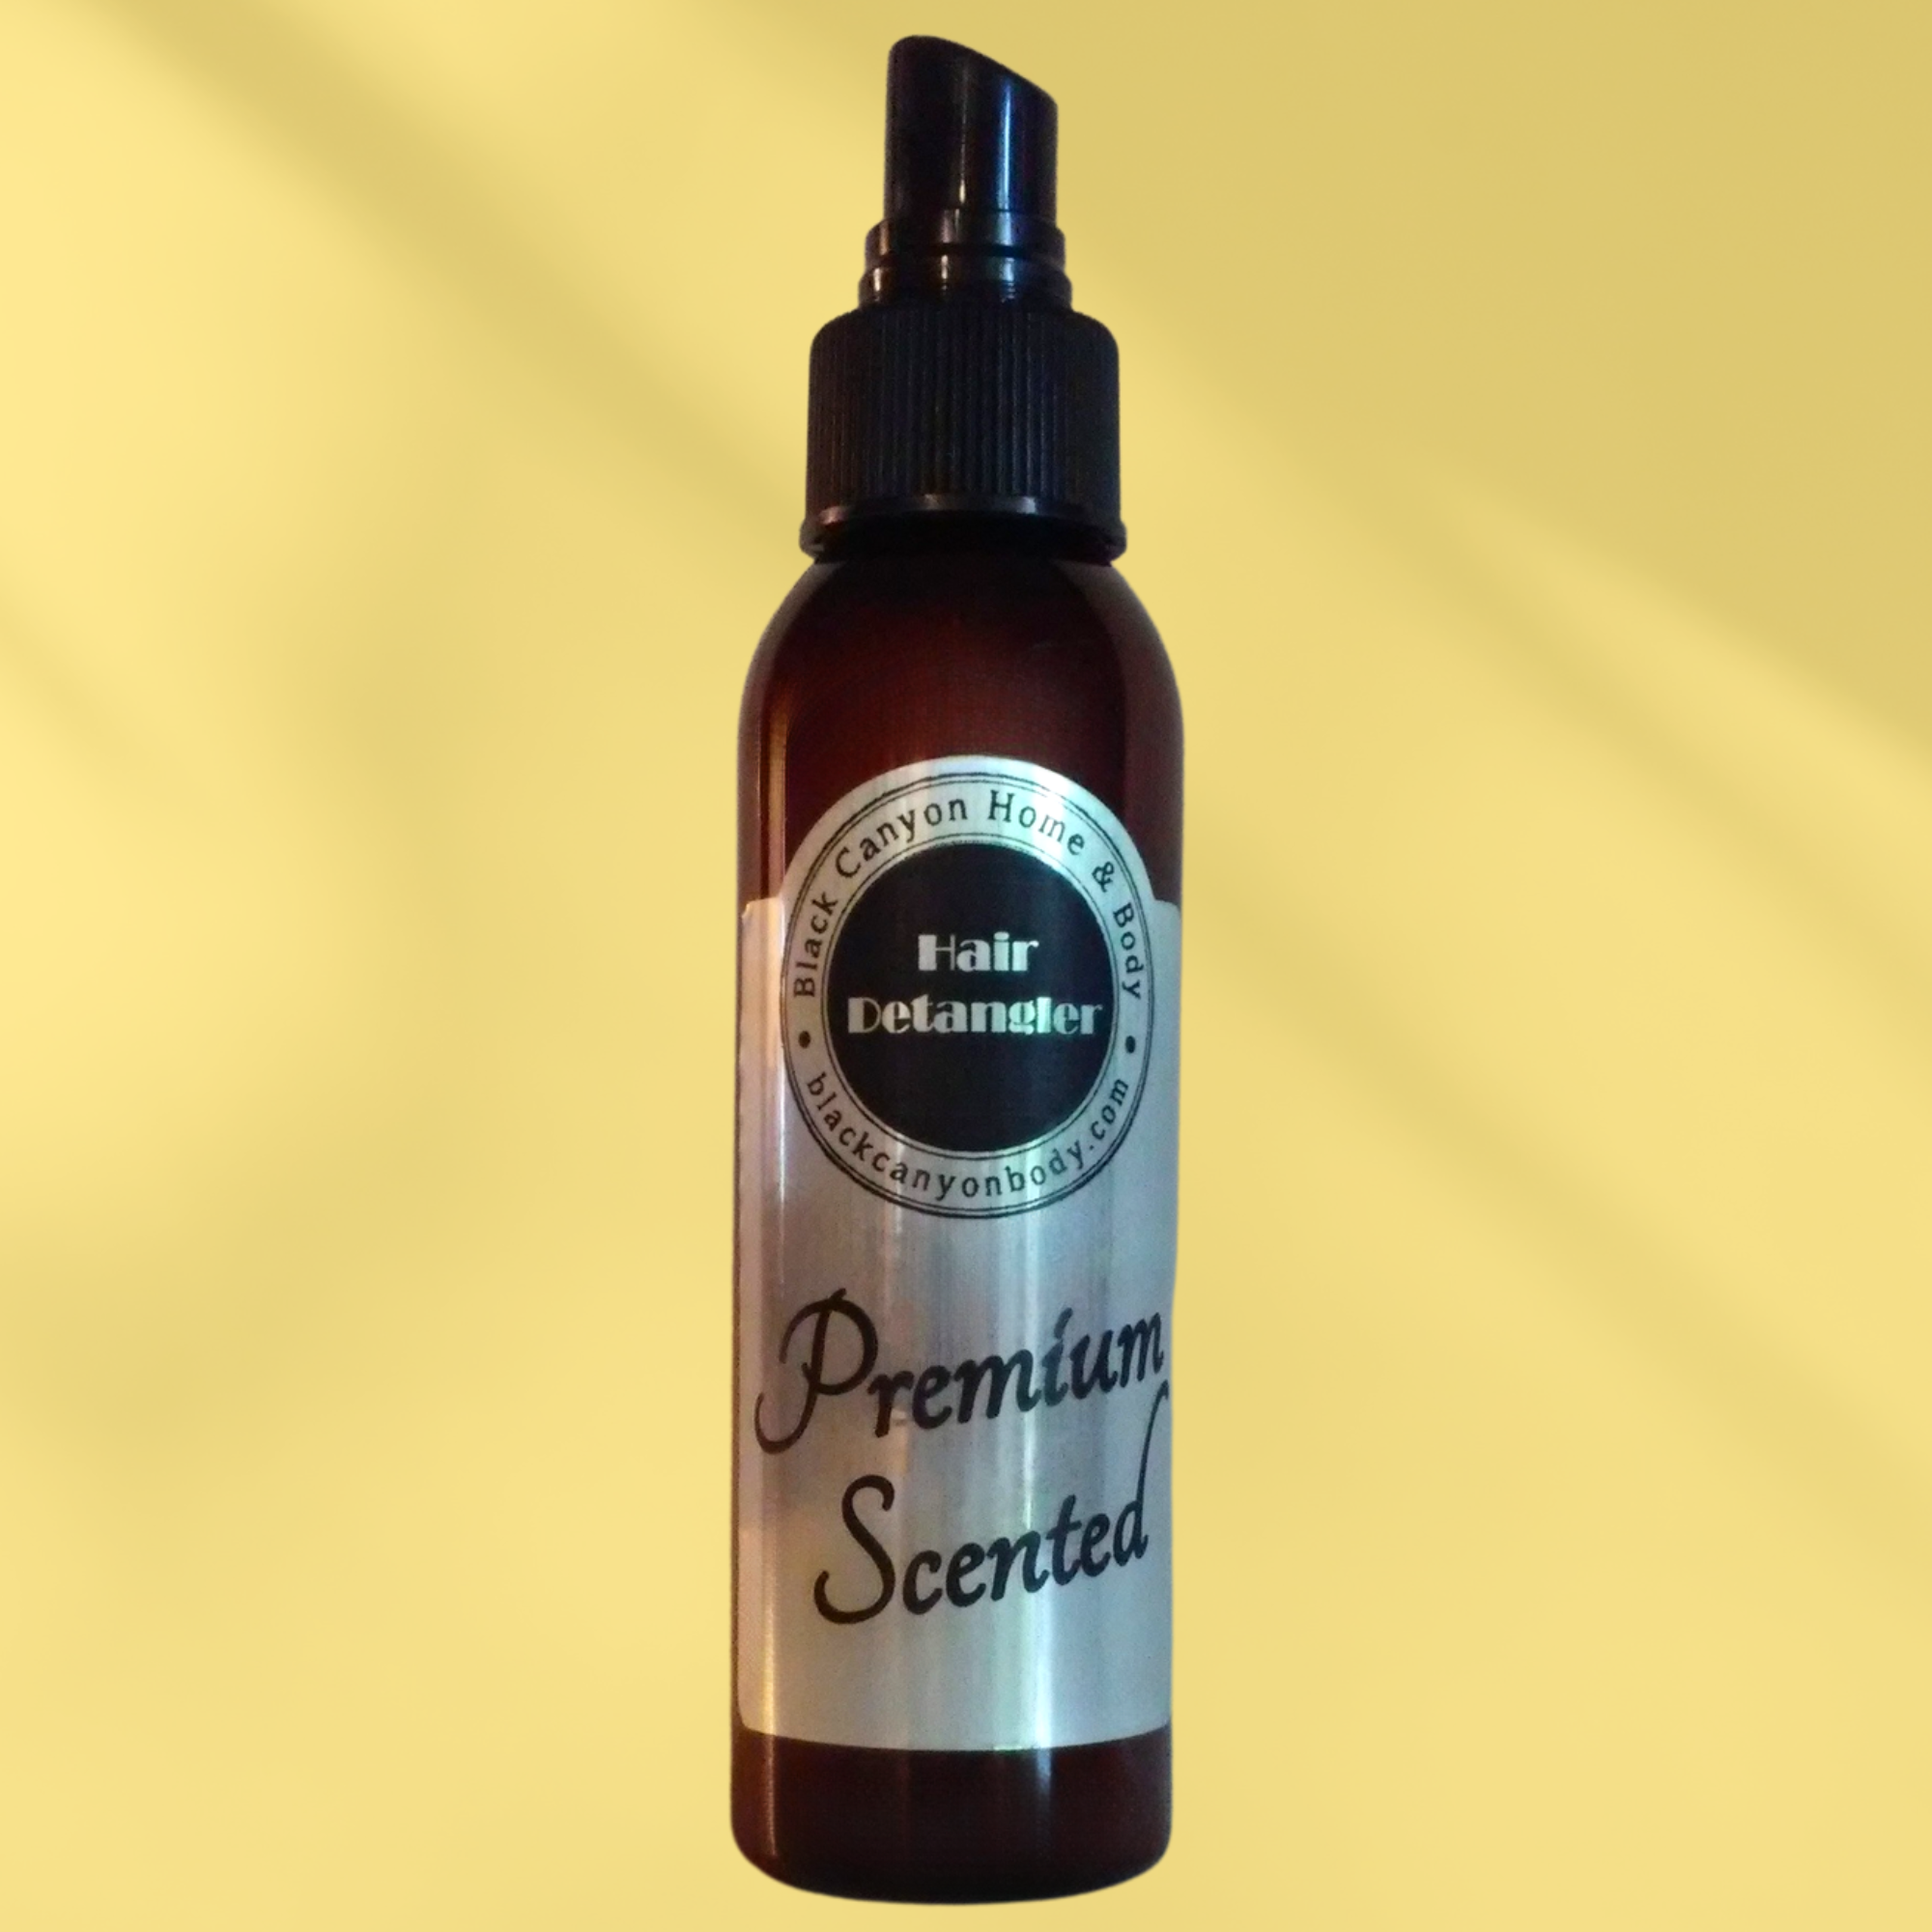 Black Canyon Apples & Eucalyptus Scented Hair Detangler Spray with Olive Oil